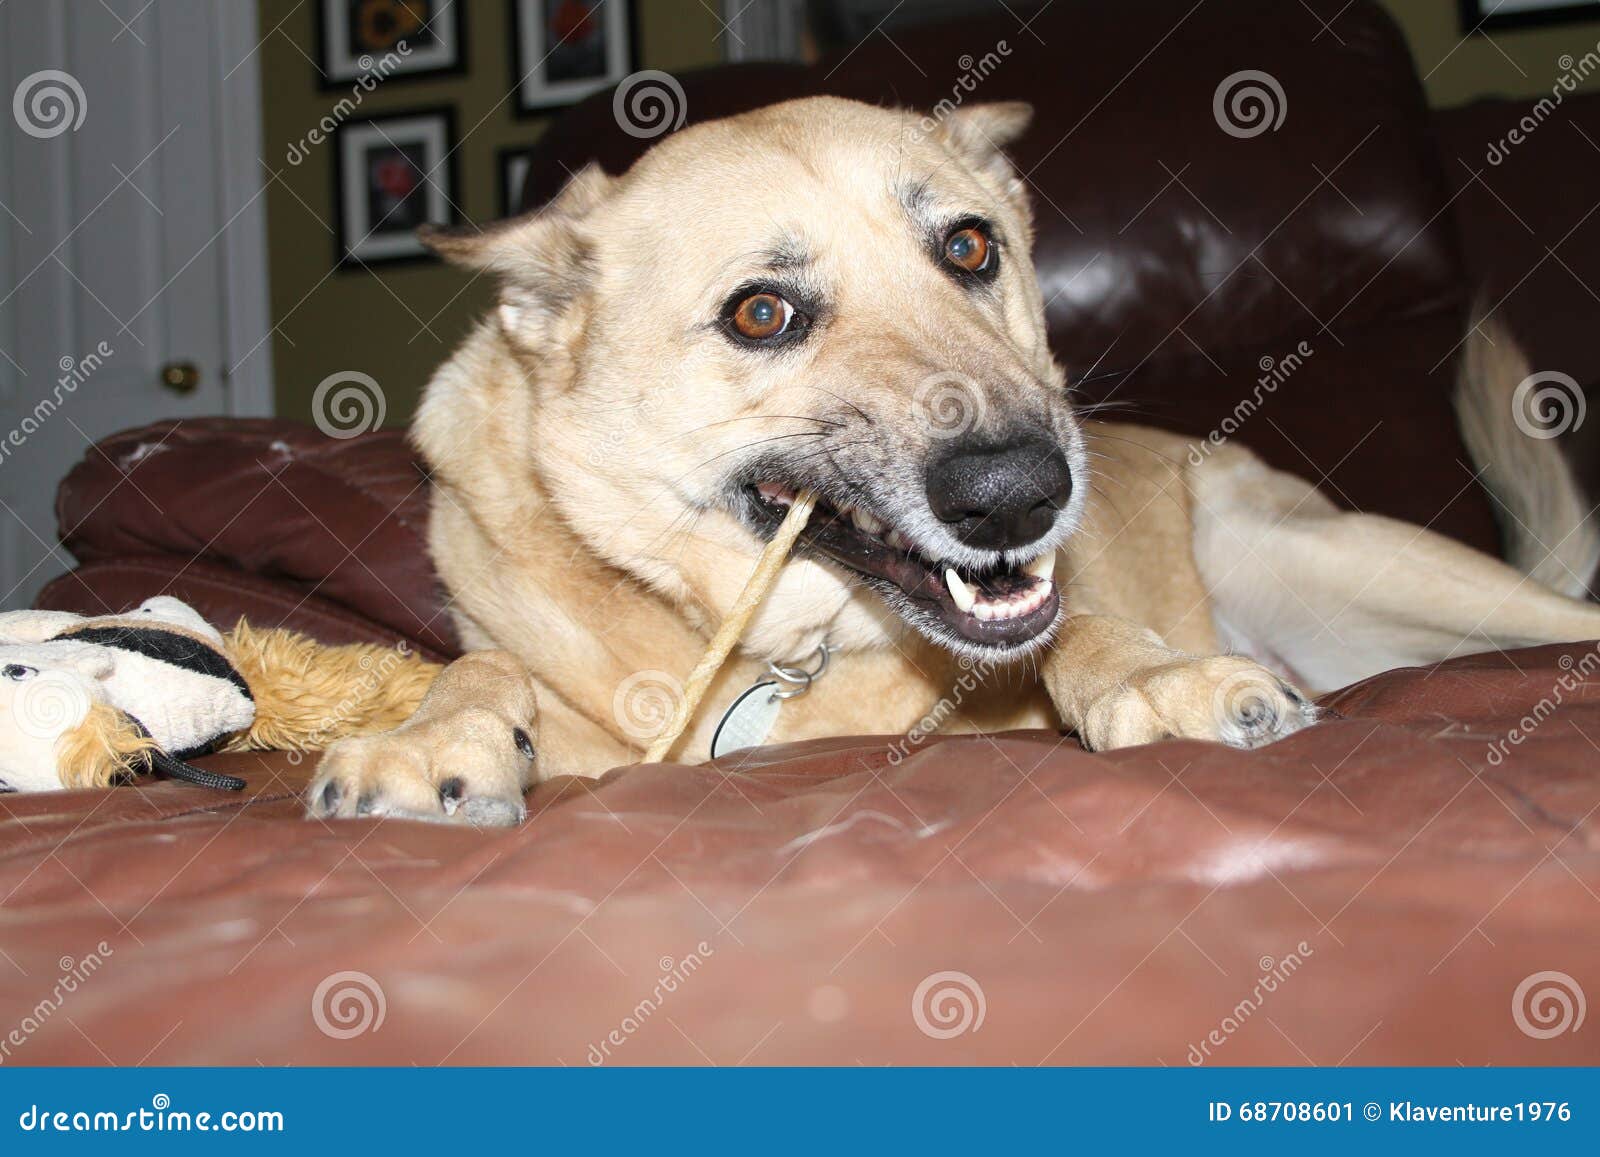 Dog Chewing Bone Stock Image Image Of Bone Small Chew 68708601